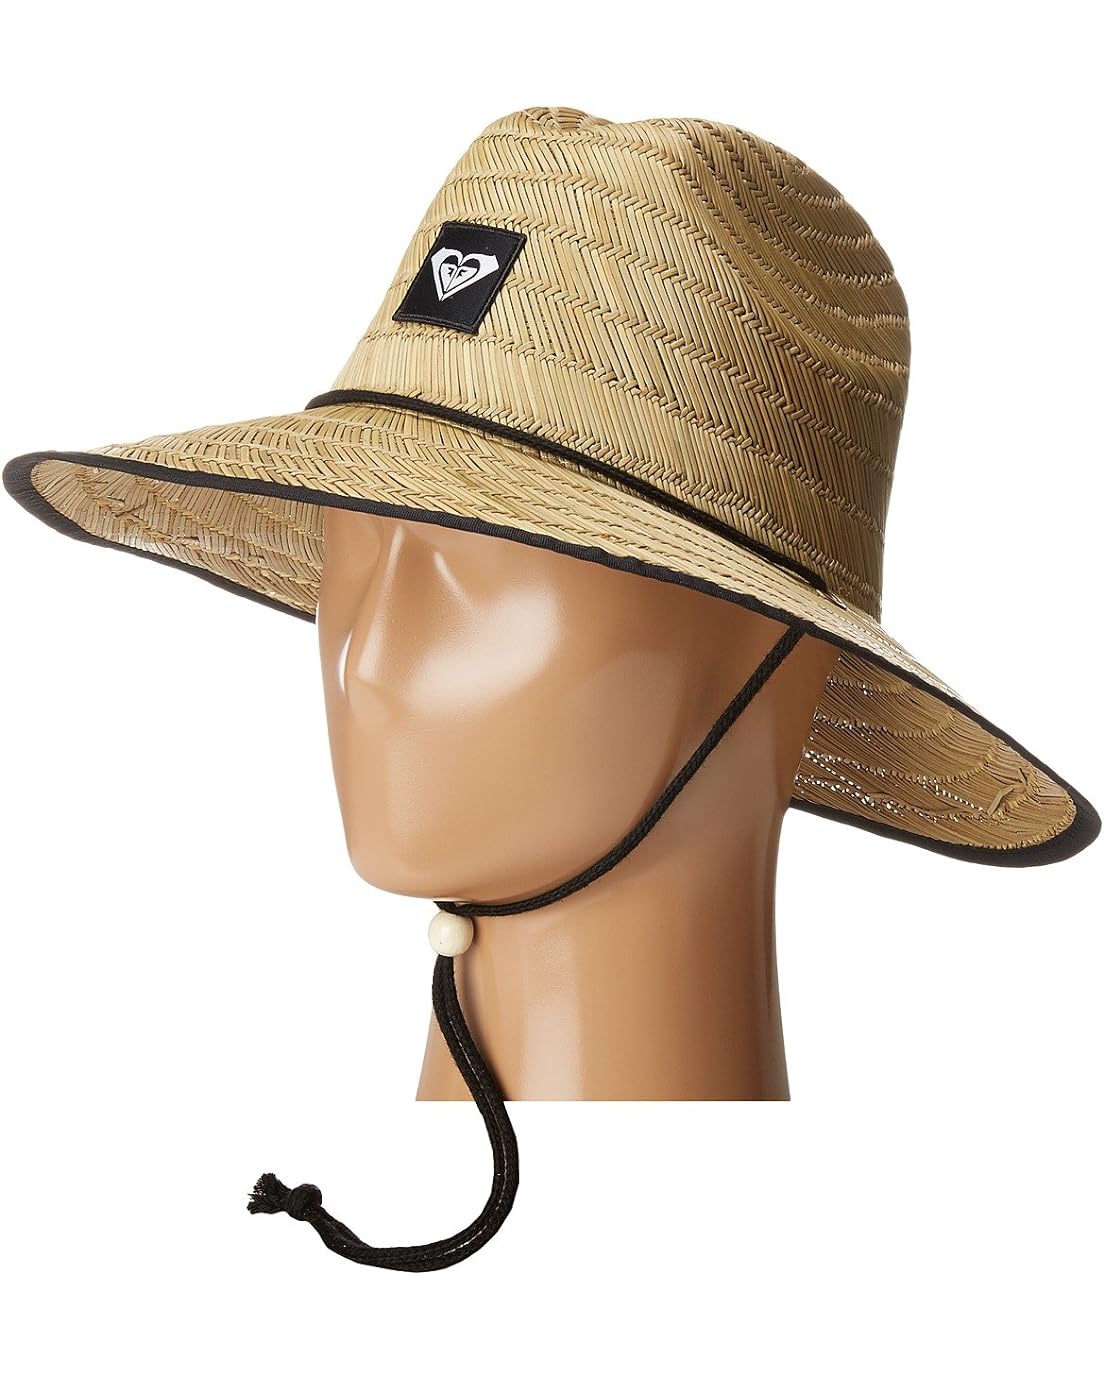 Roxy Tomboy Straw Sun Hat